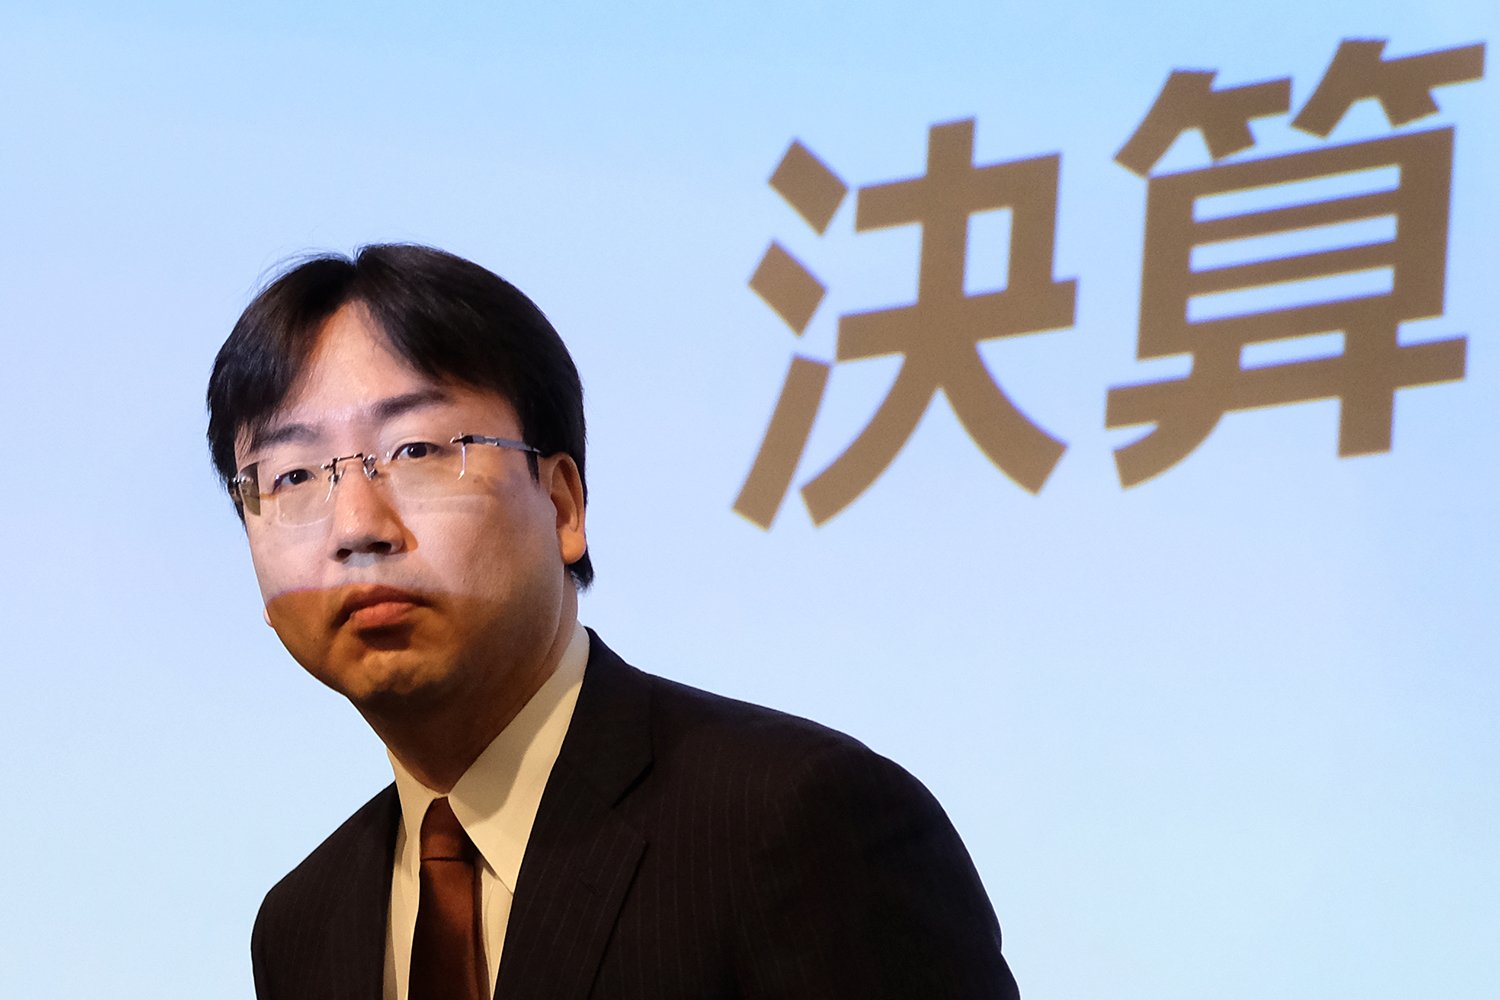 Nintendo President Shuntaro Furukawa, who said Super Mario Kart convinced him to join the company